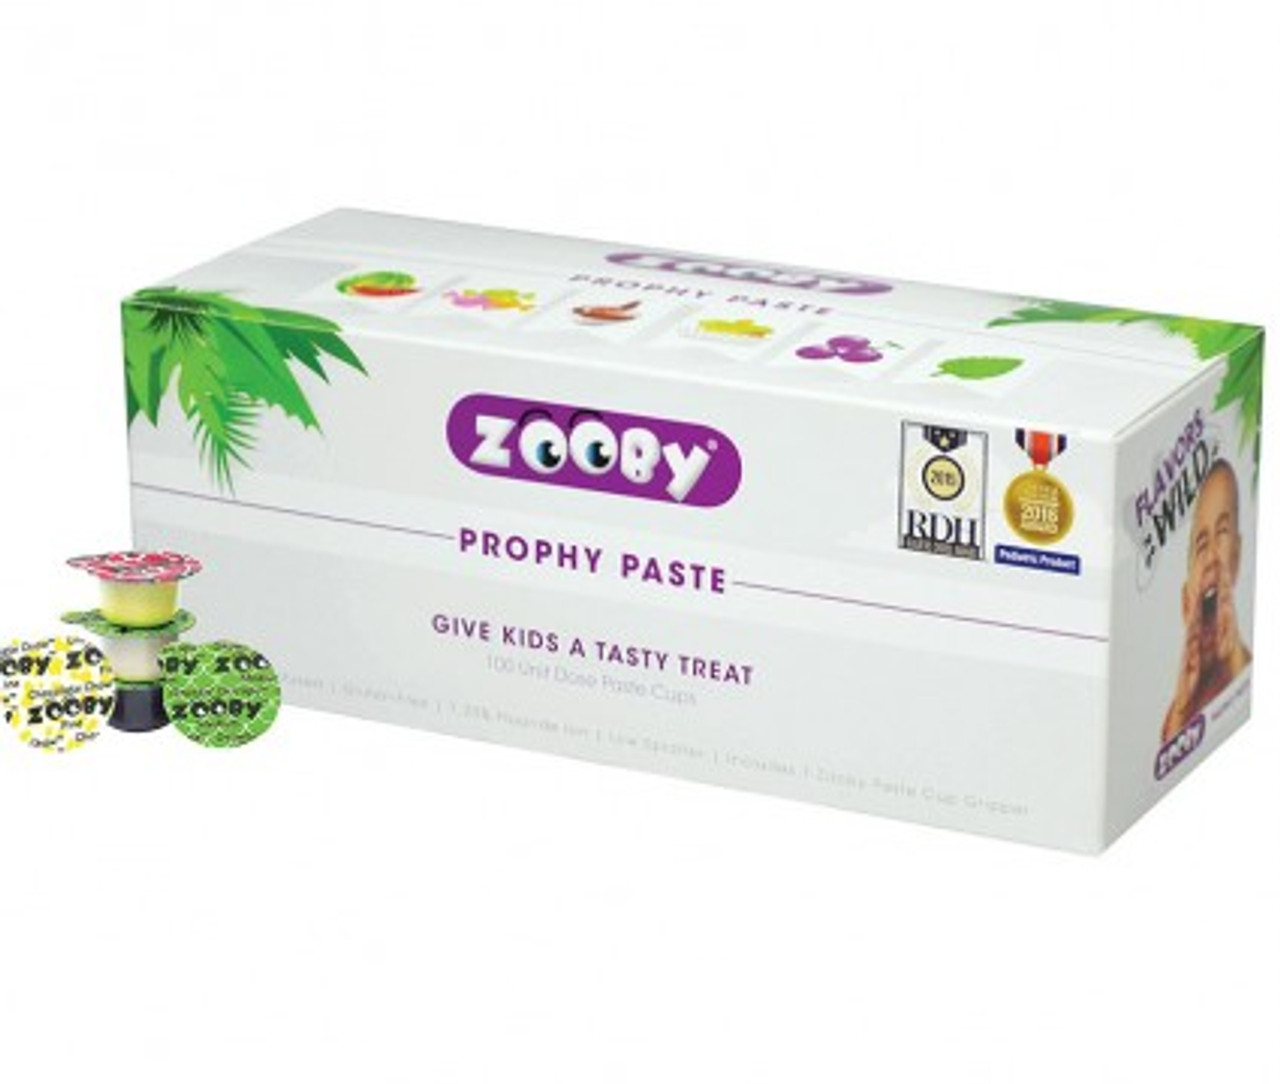 Zooby Prophy Paste Gator Gum Medium 100/bx